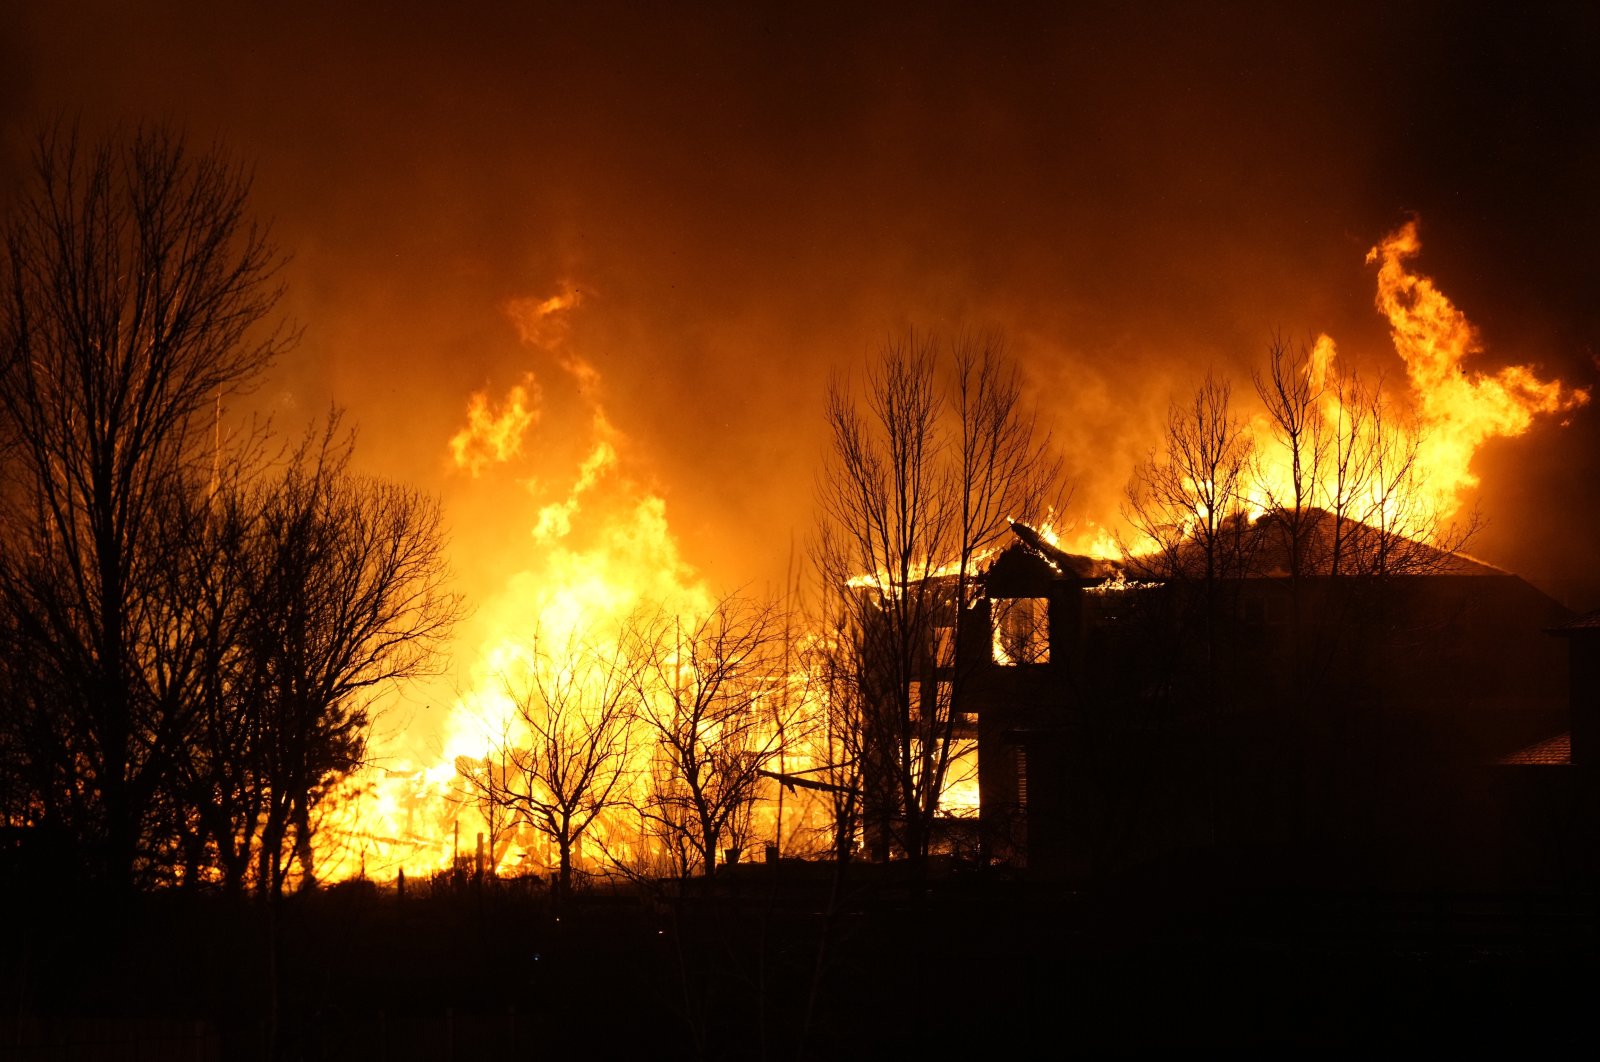 Homes burn as wildfires rip through a development, Dec. 30, 2021, in Superior, Colo. (AP Photo)